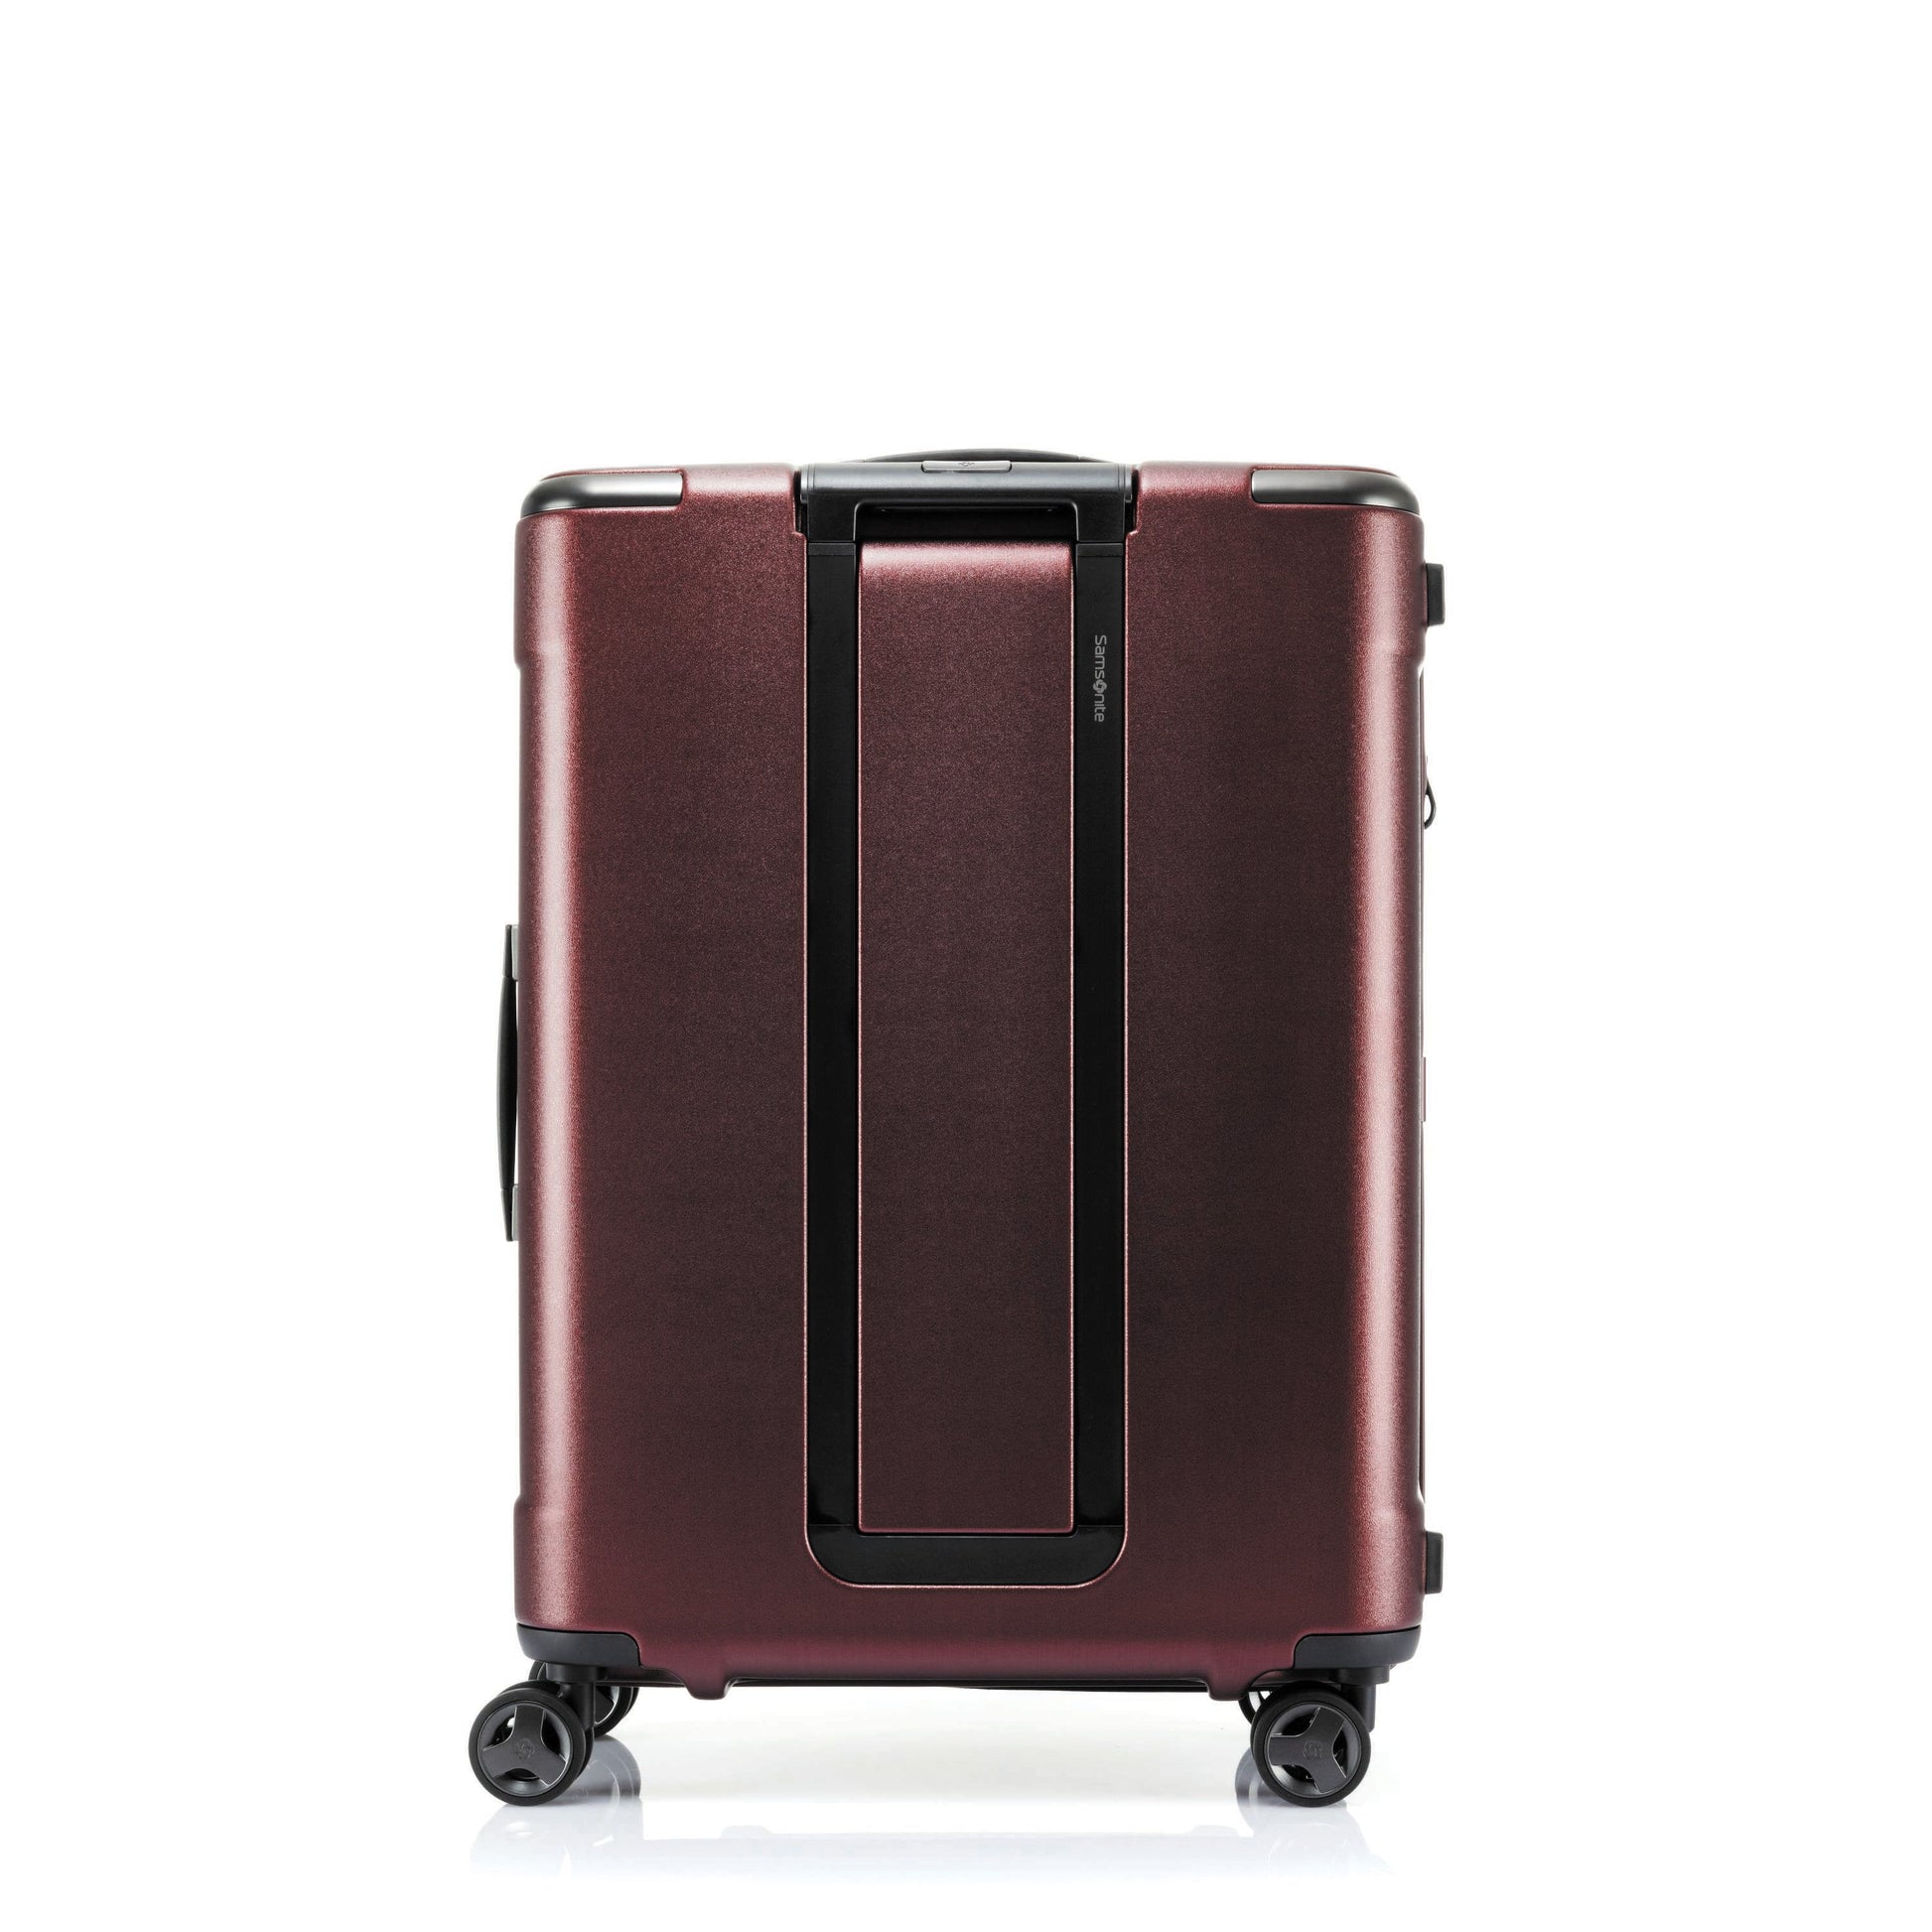 Samsonite Evoa 3 Piece Spinner Expandable Luggage Set